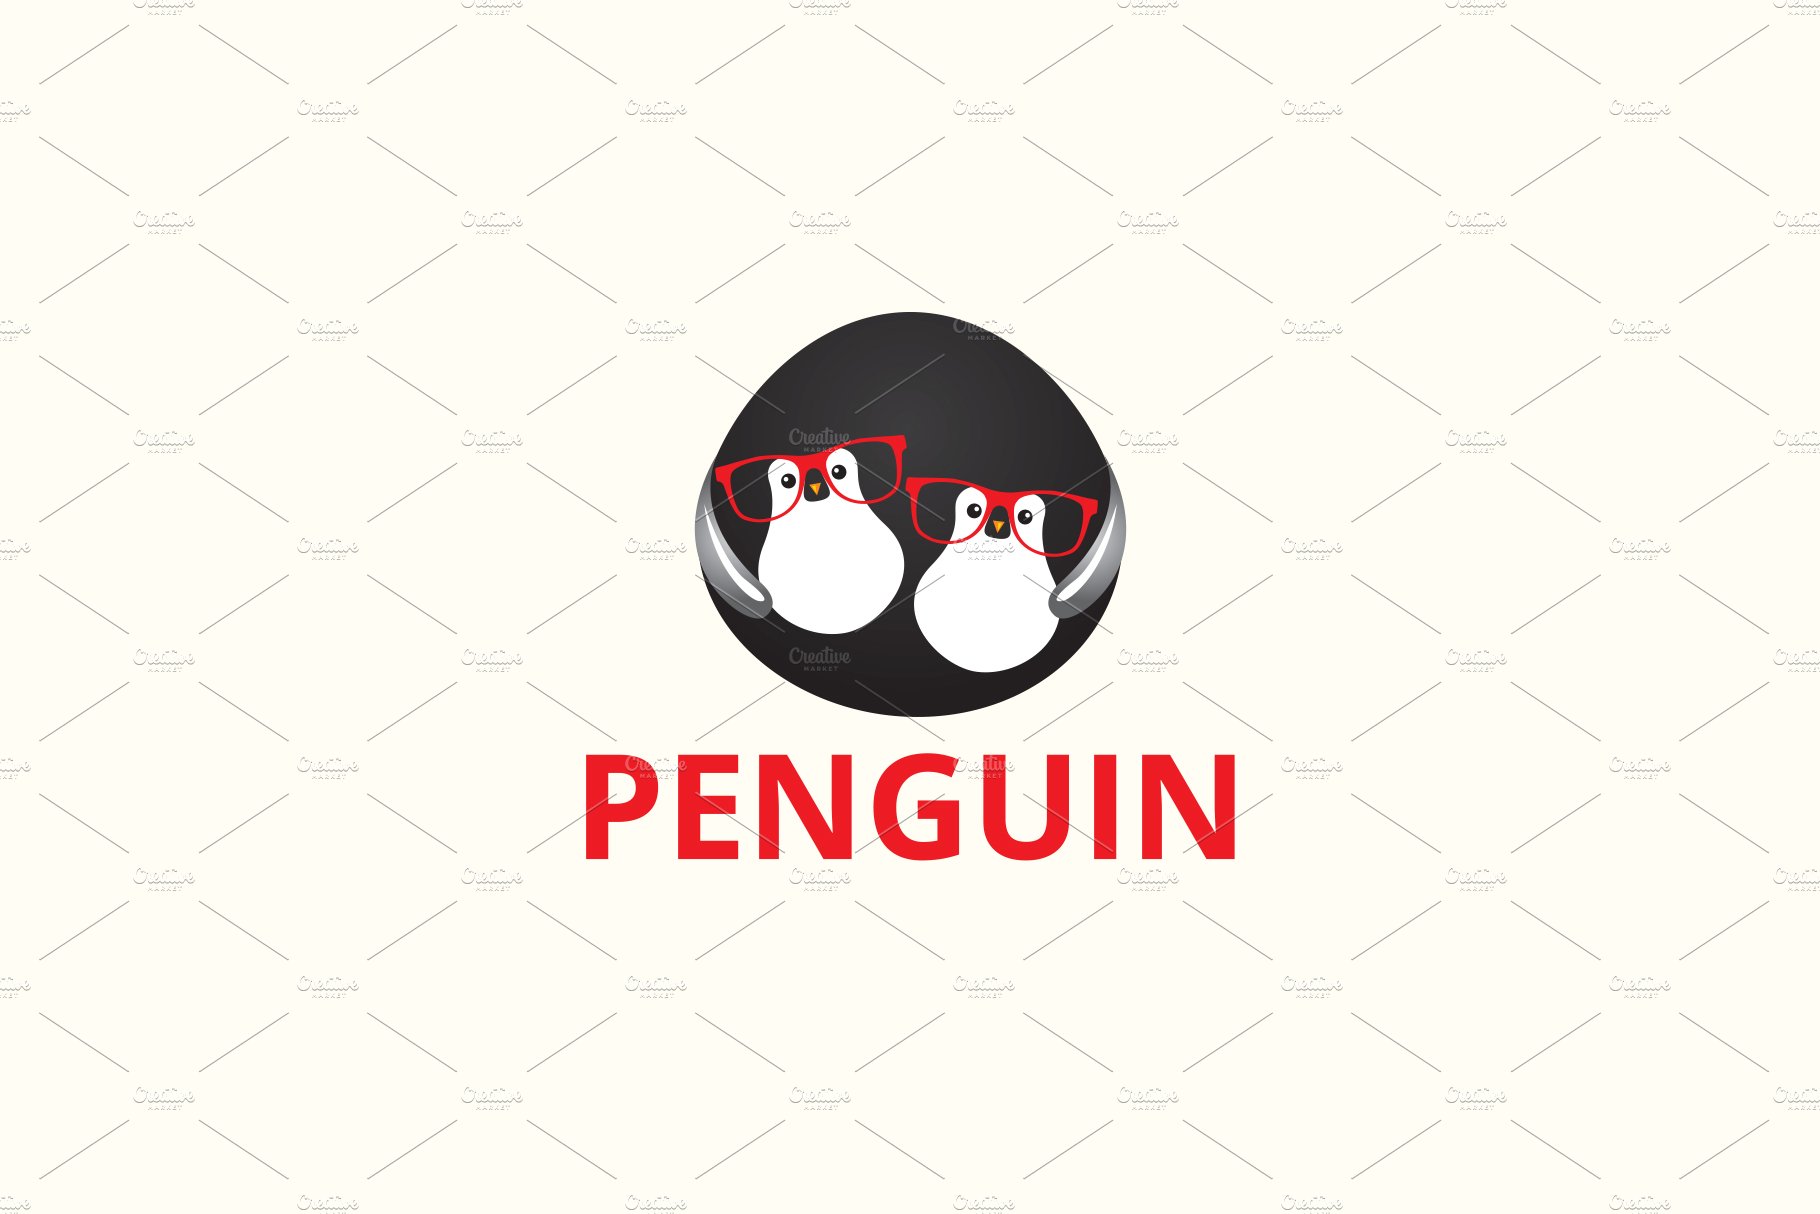 Penguin Logo Design cover image.